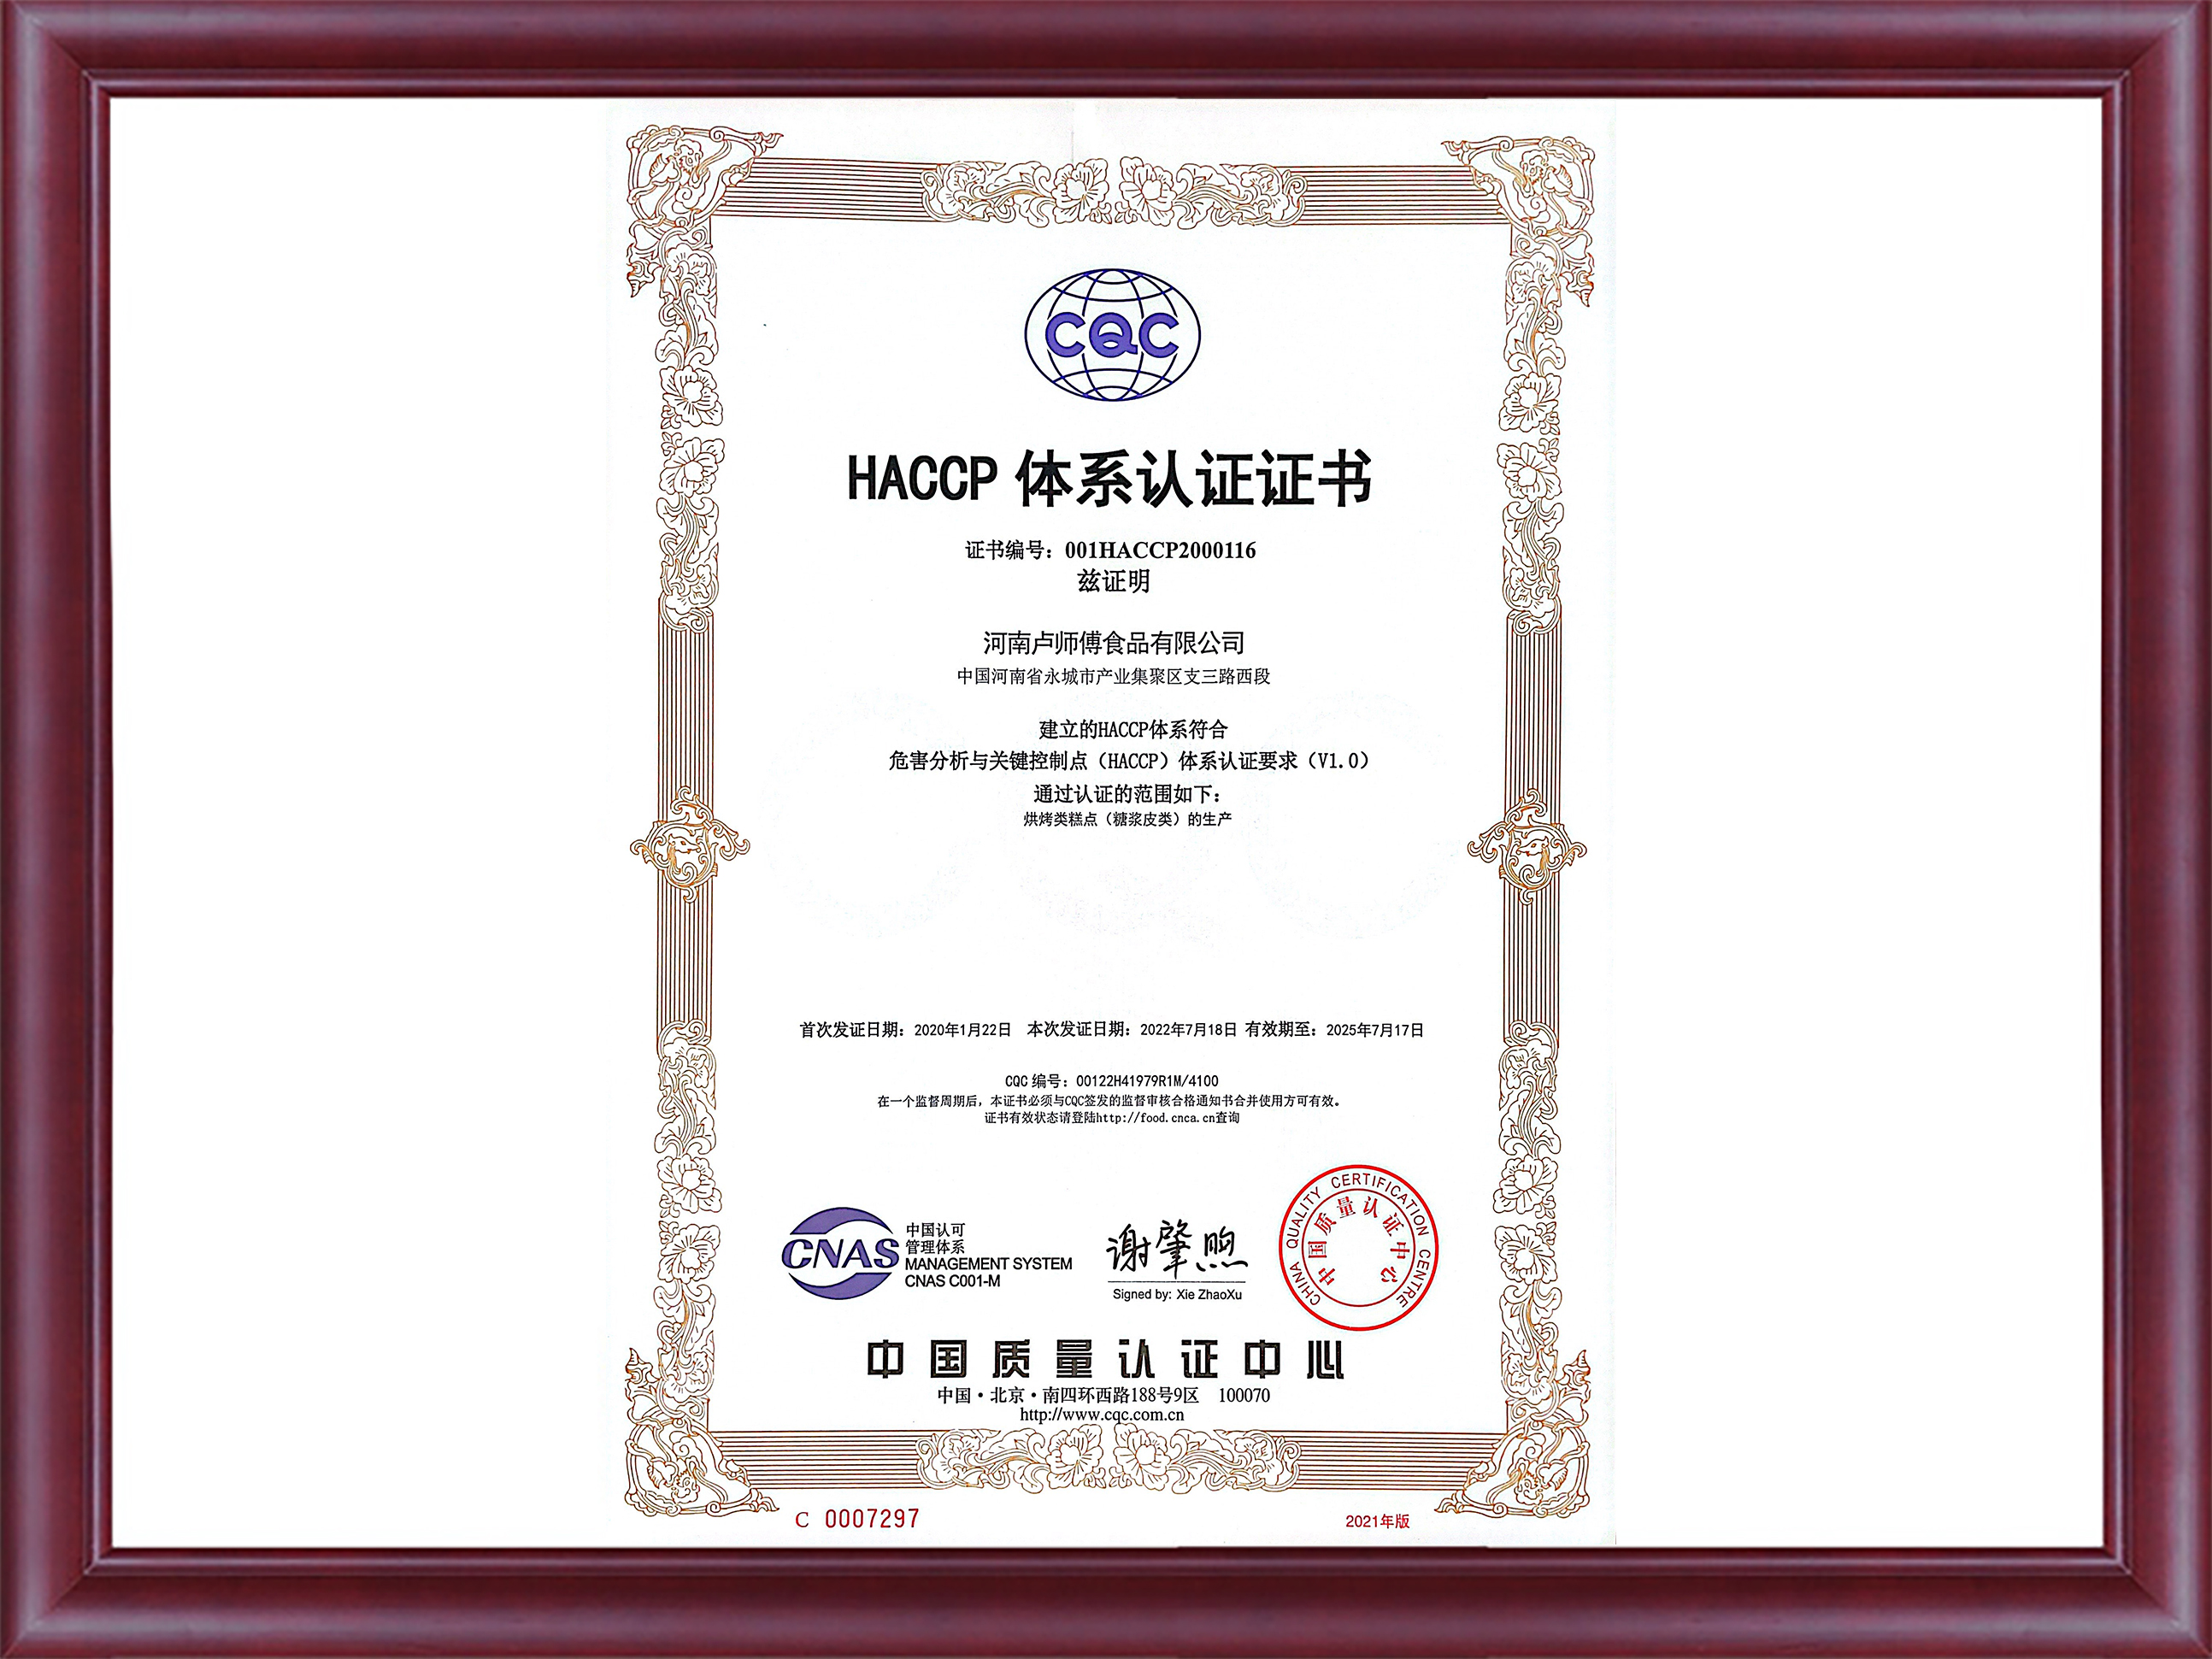 HACCP管理体系四项国际认证